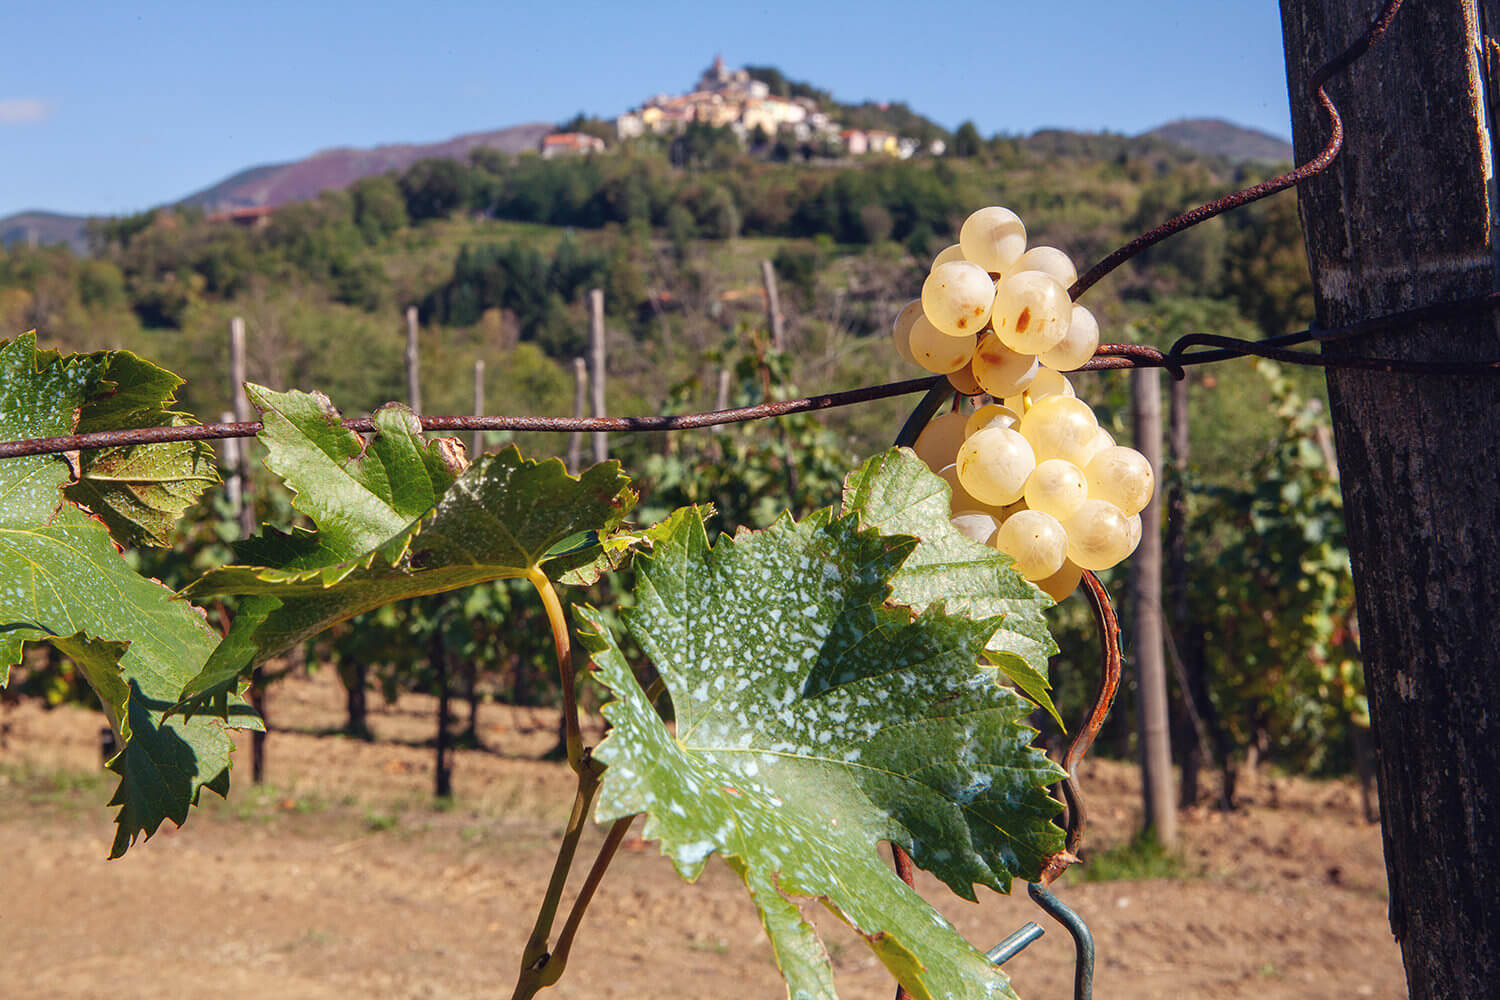 Vineyard near La Spezia, Italy